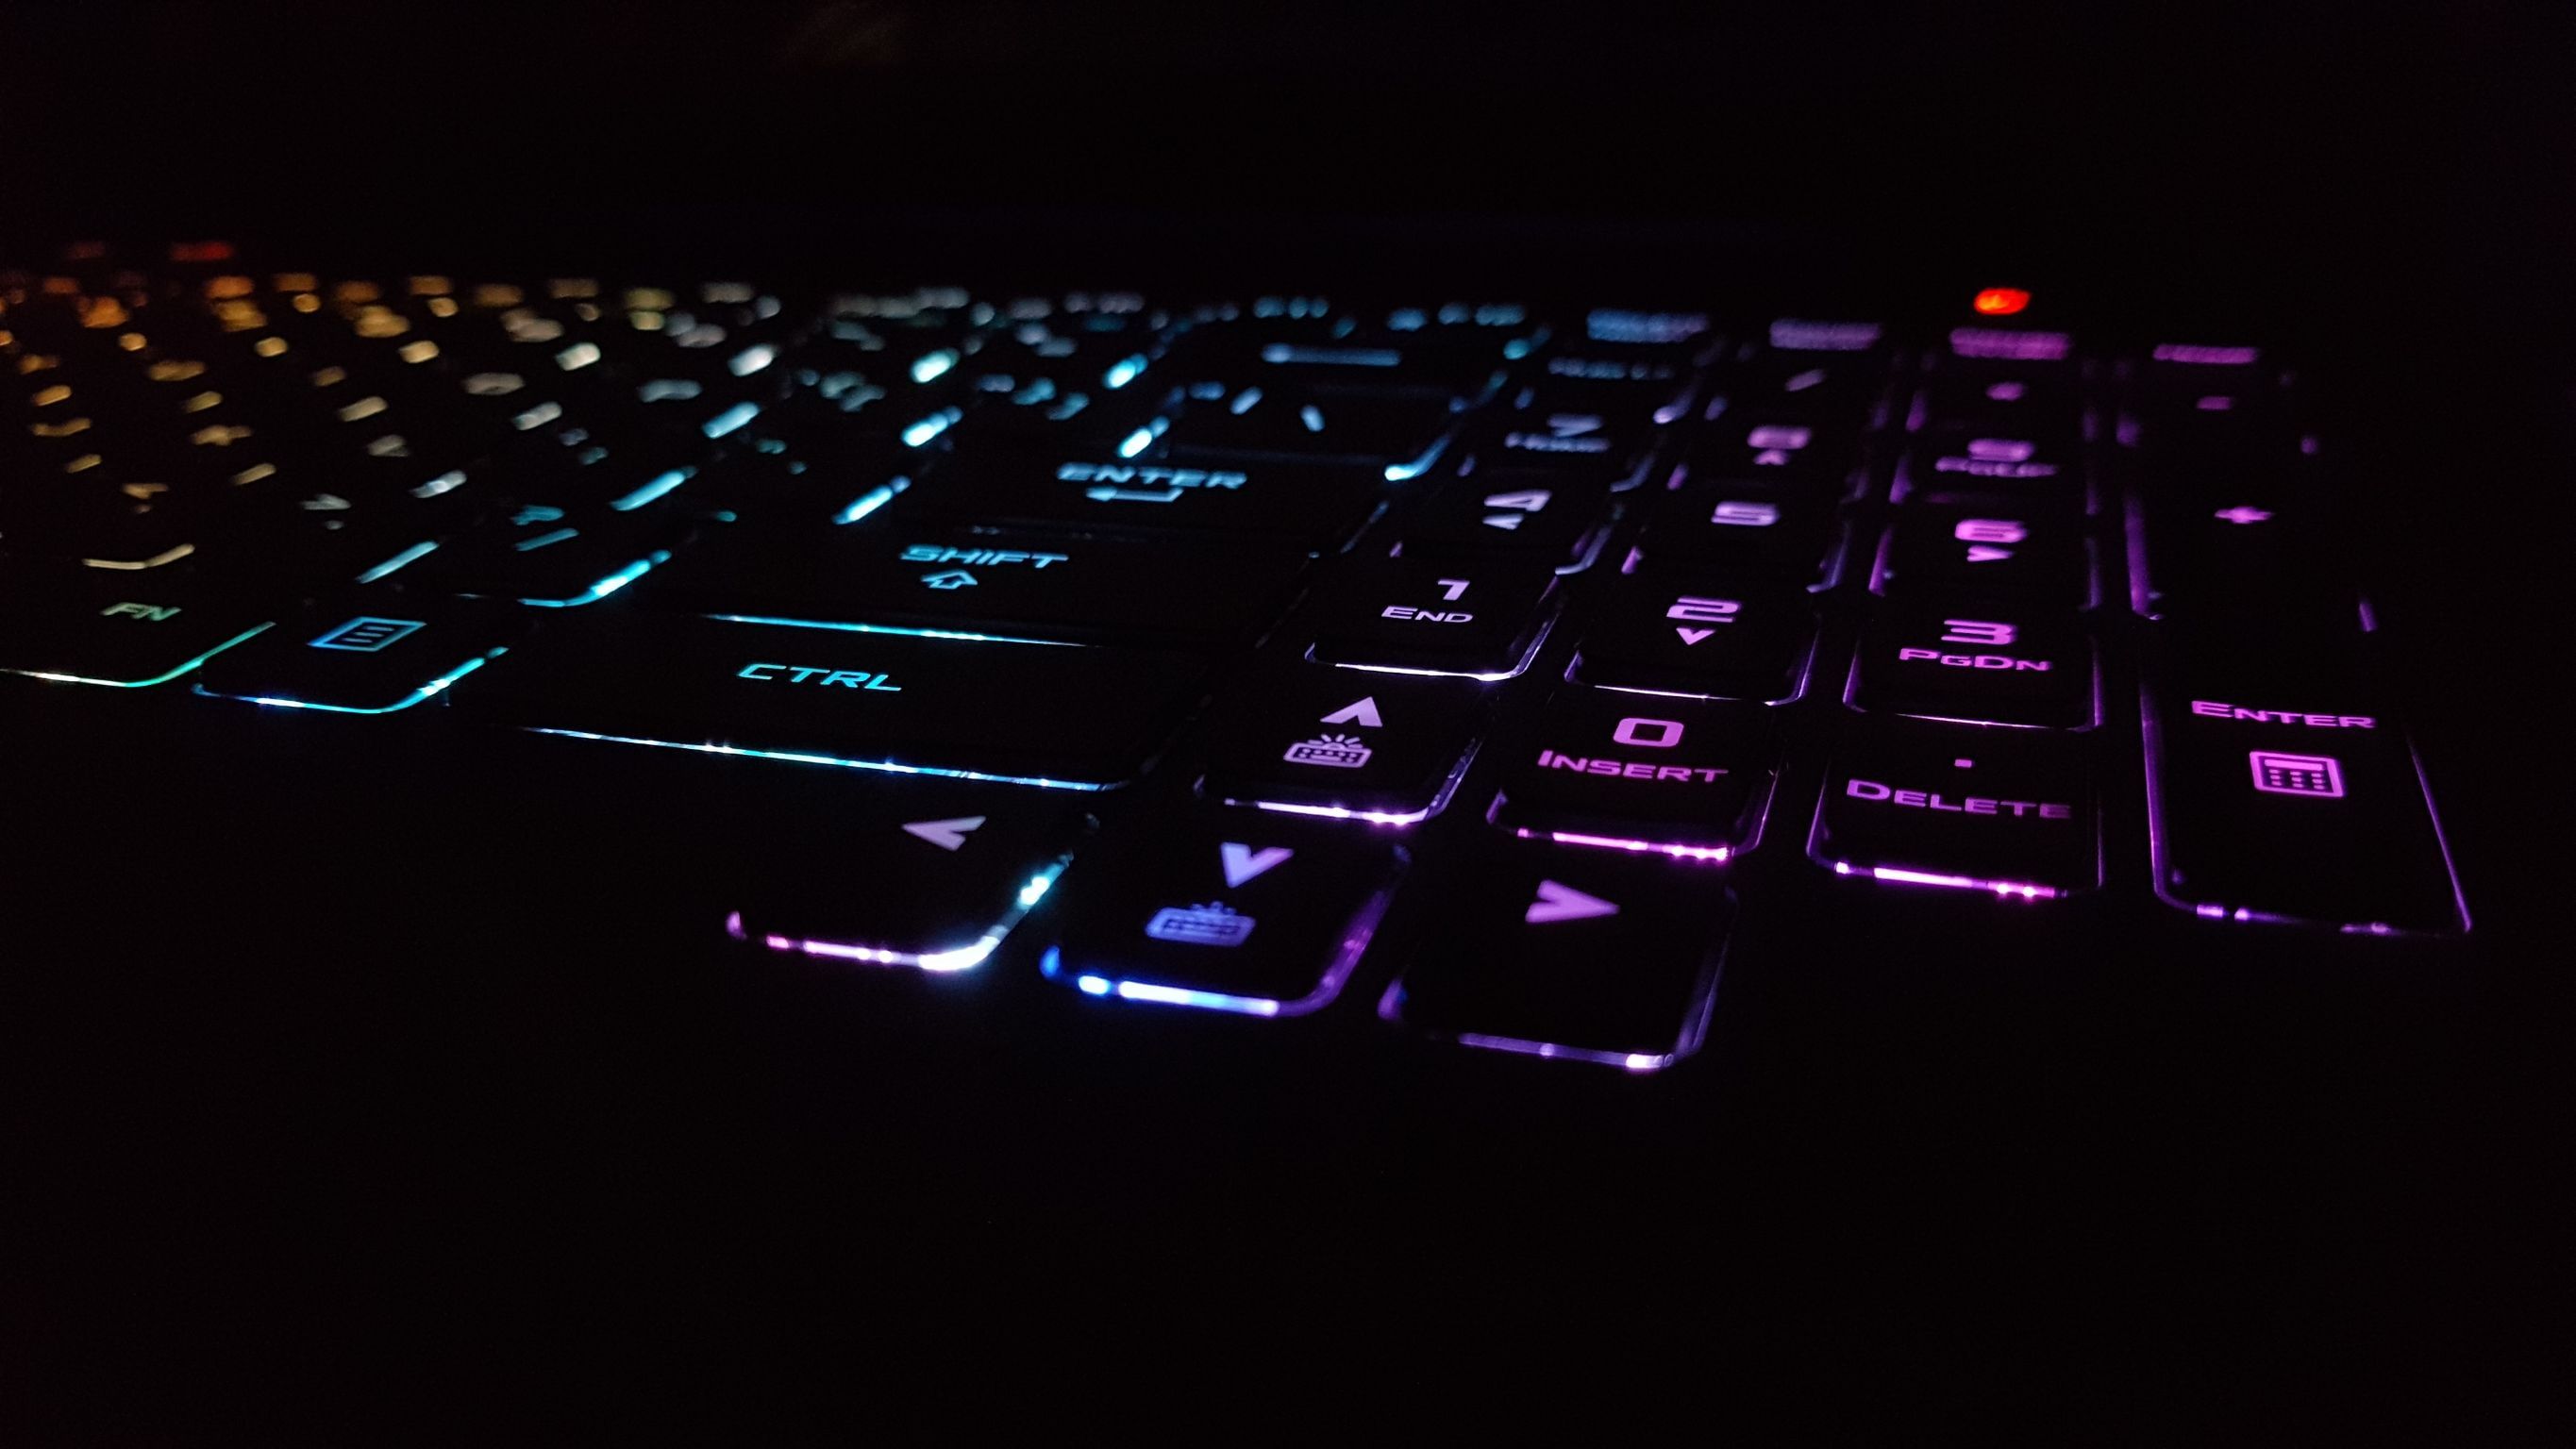 HD wallpaper: Republic of Gamers, laptop, technology, keyboards, RGB, backlit